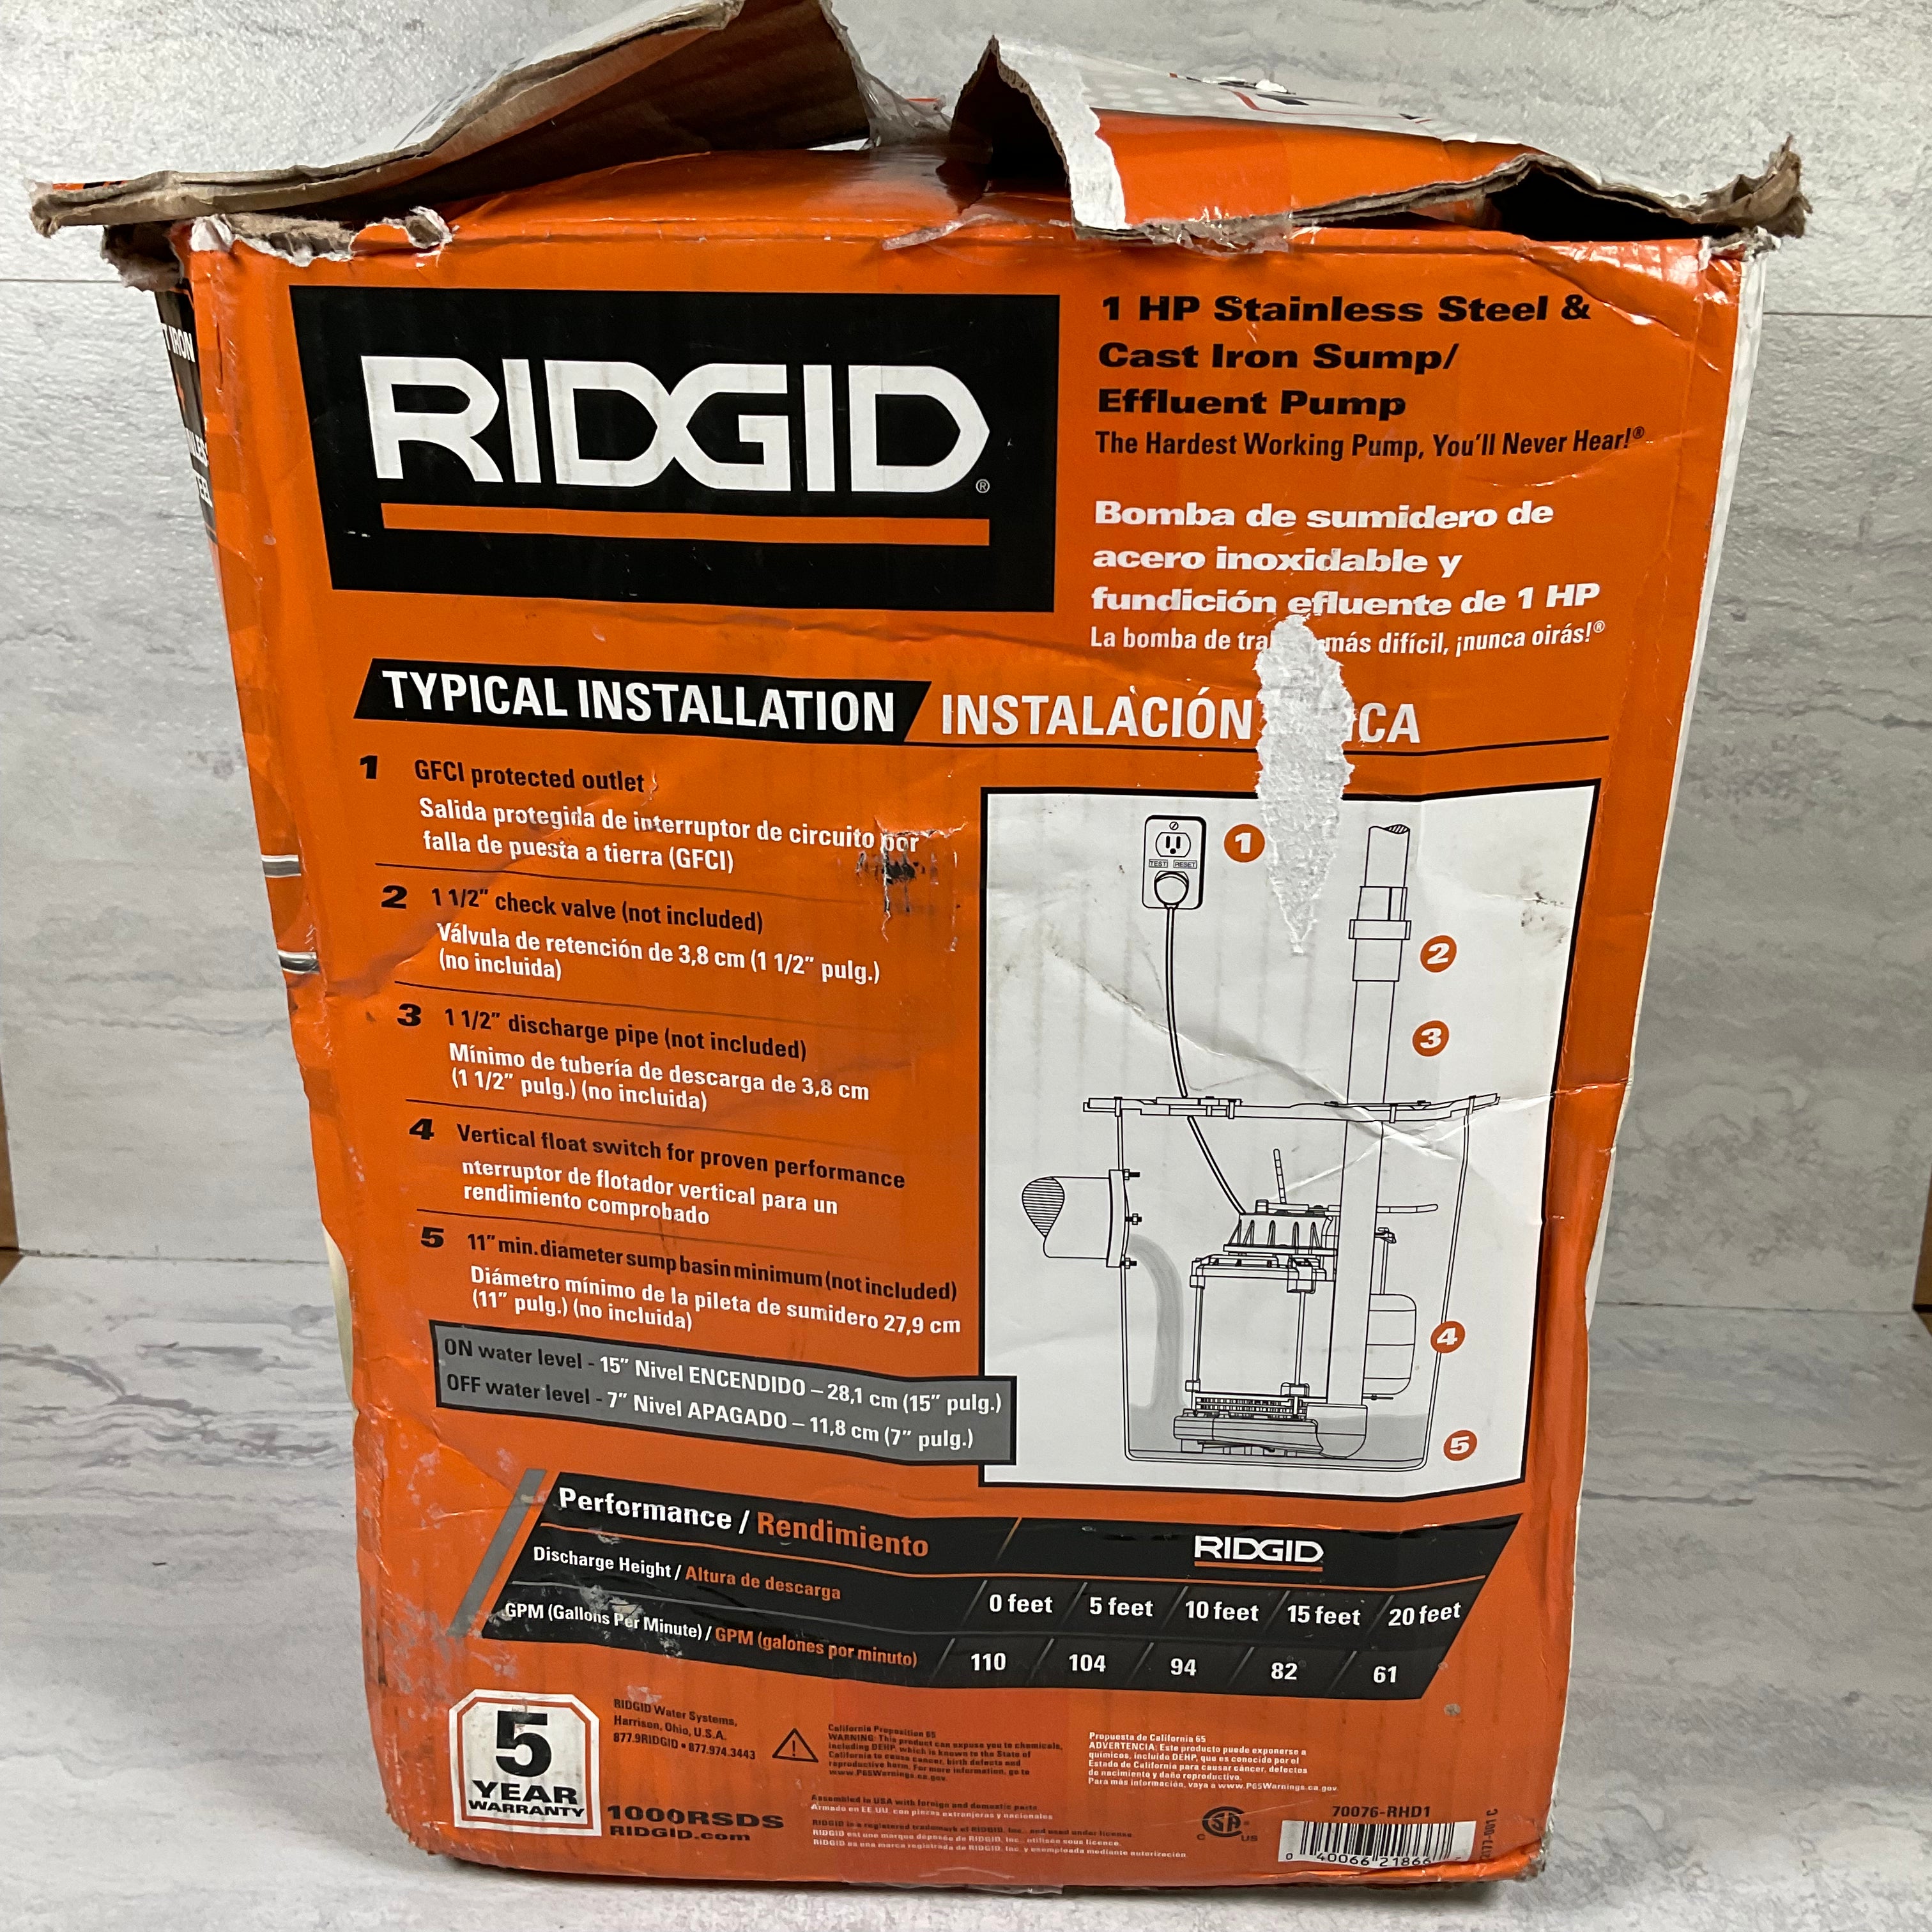 RIDGID 1 HP Stainless Steel Dual Suction Sump Pump (7017102606519)